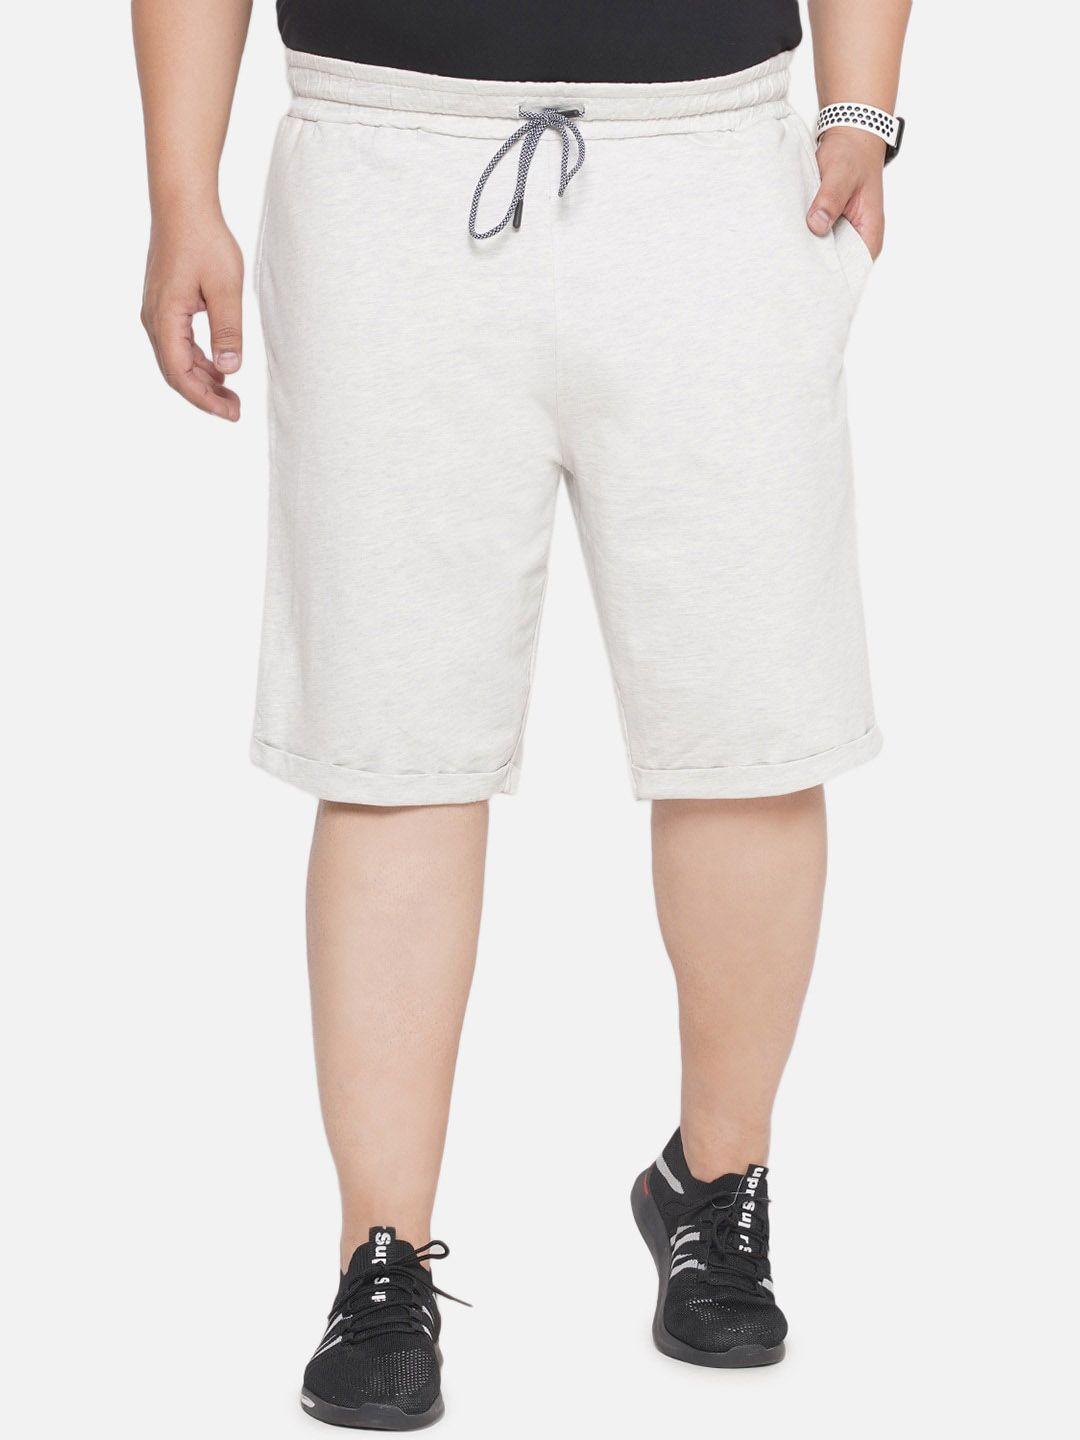 santonio-men-plus-size-typography-printed-pure-cotton-shorts